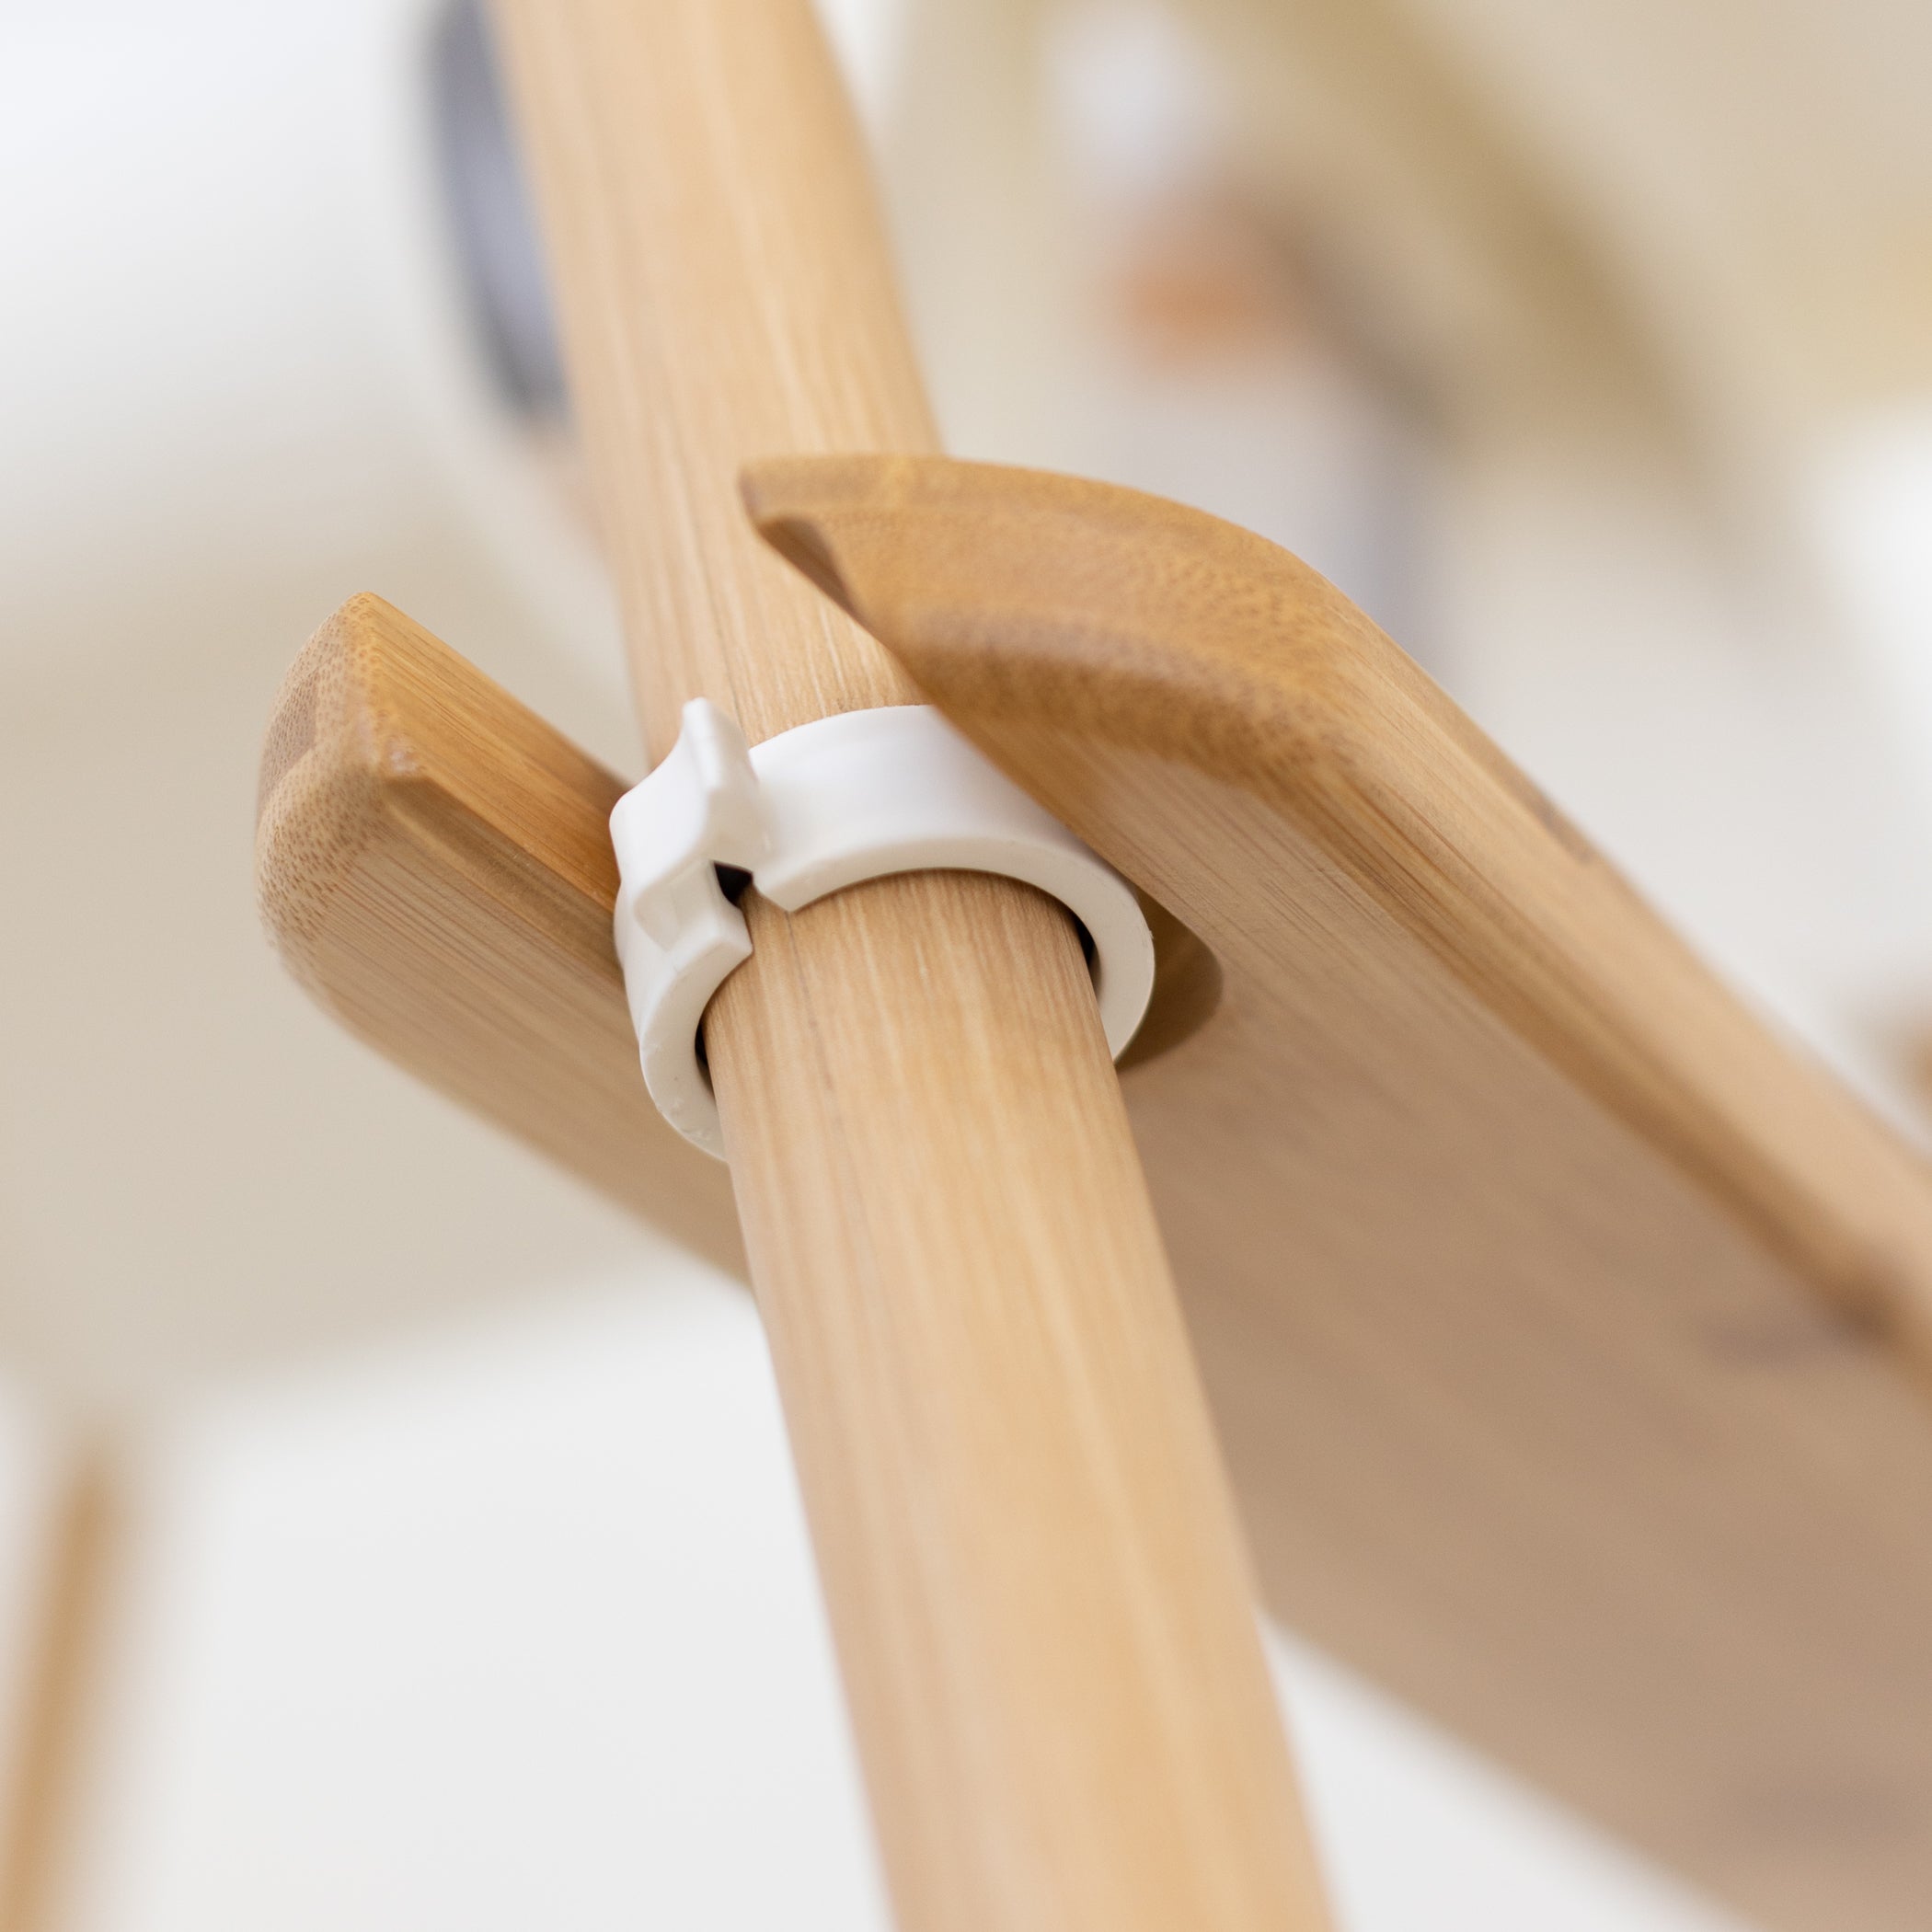 IKEA Highchair Footrest Bamboo Wood // Adjustable Baby Antilop